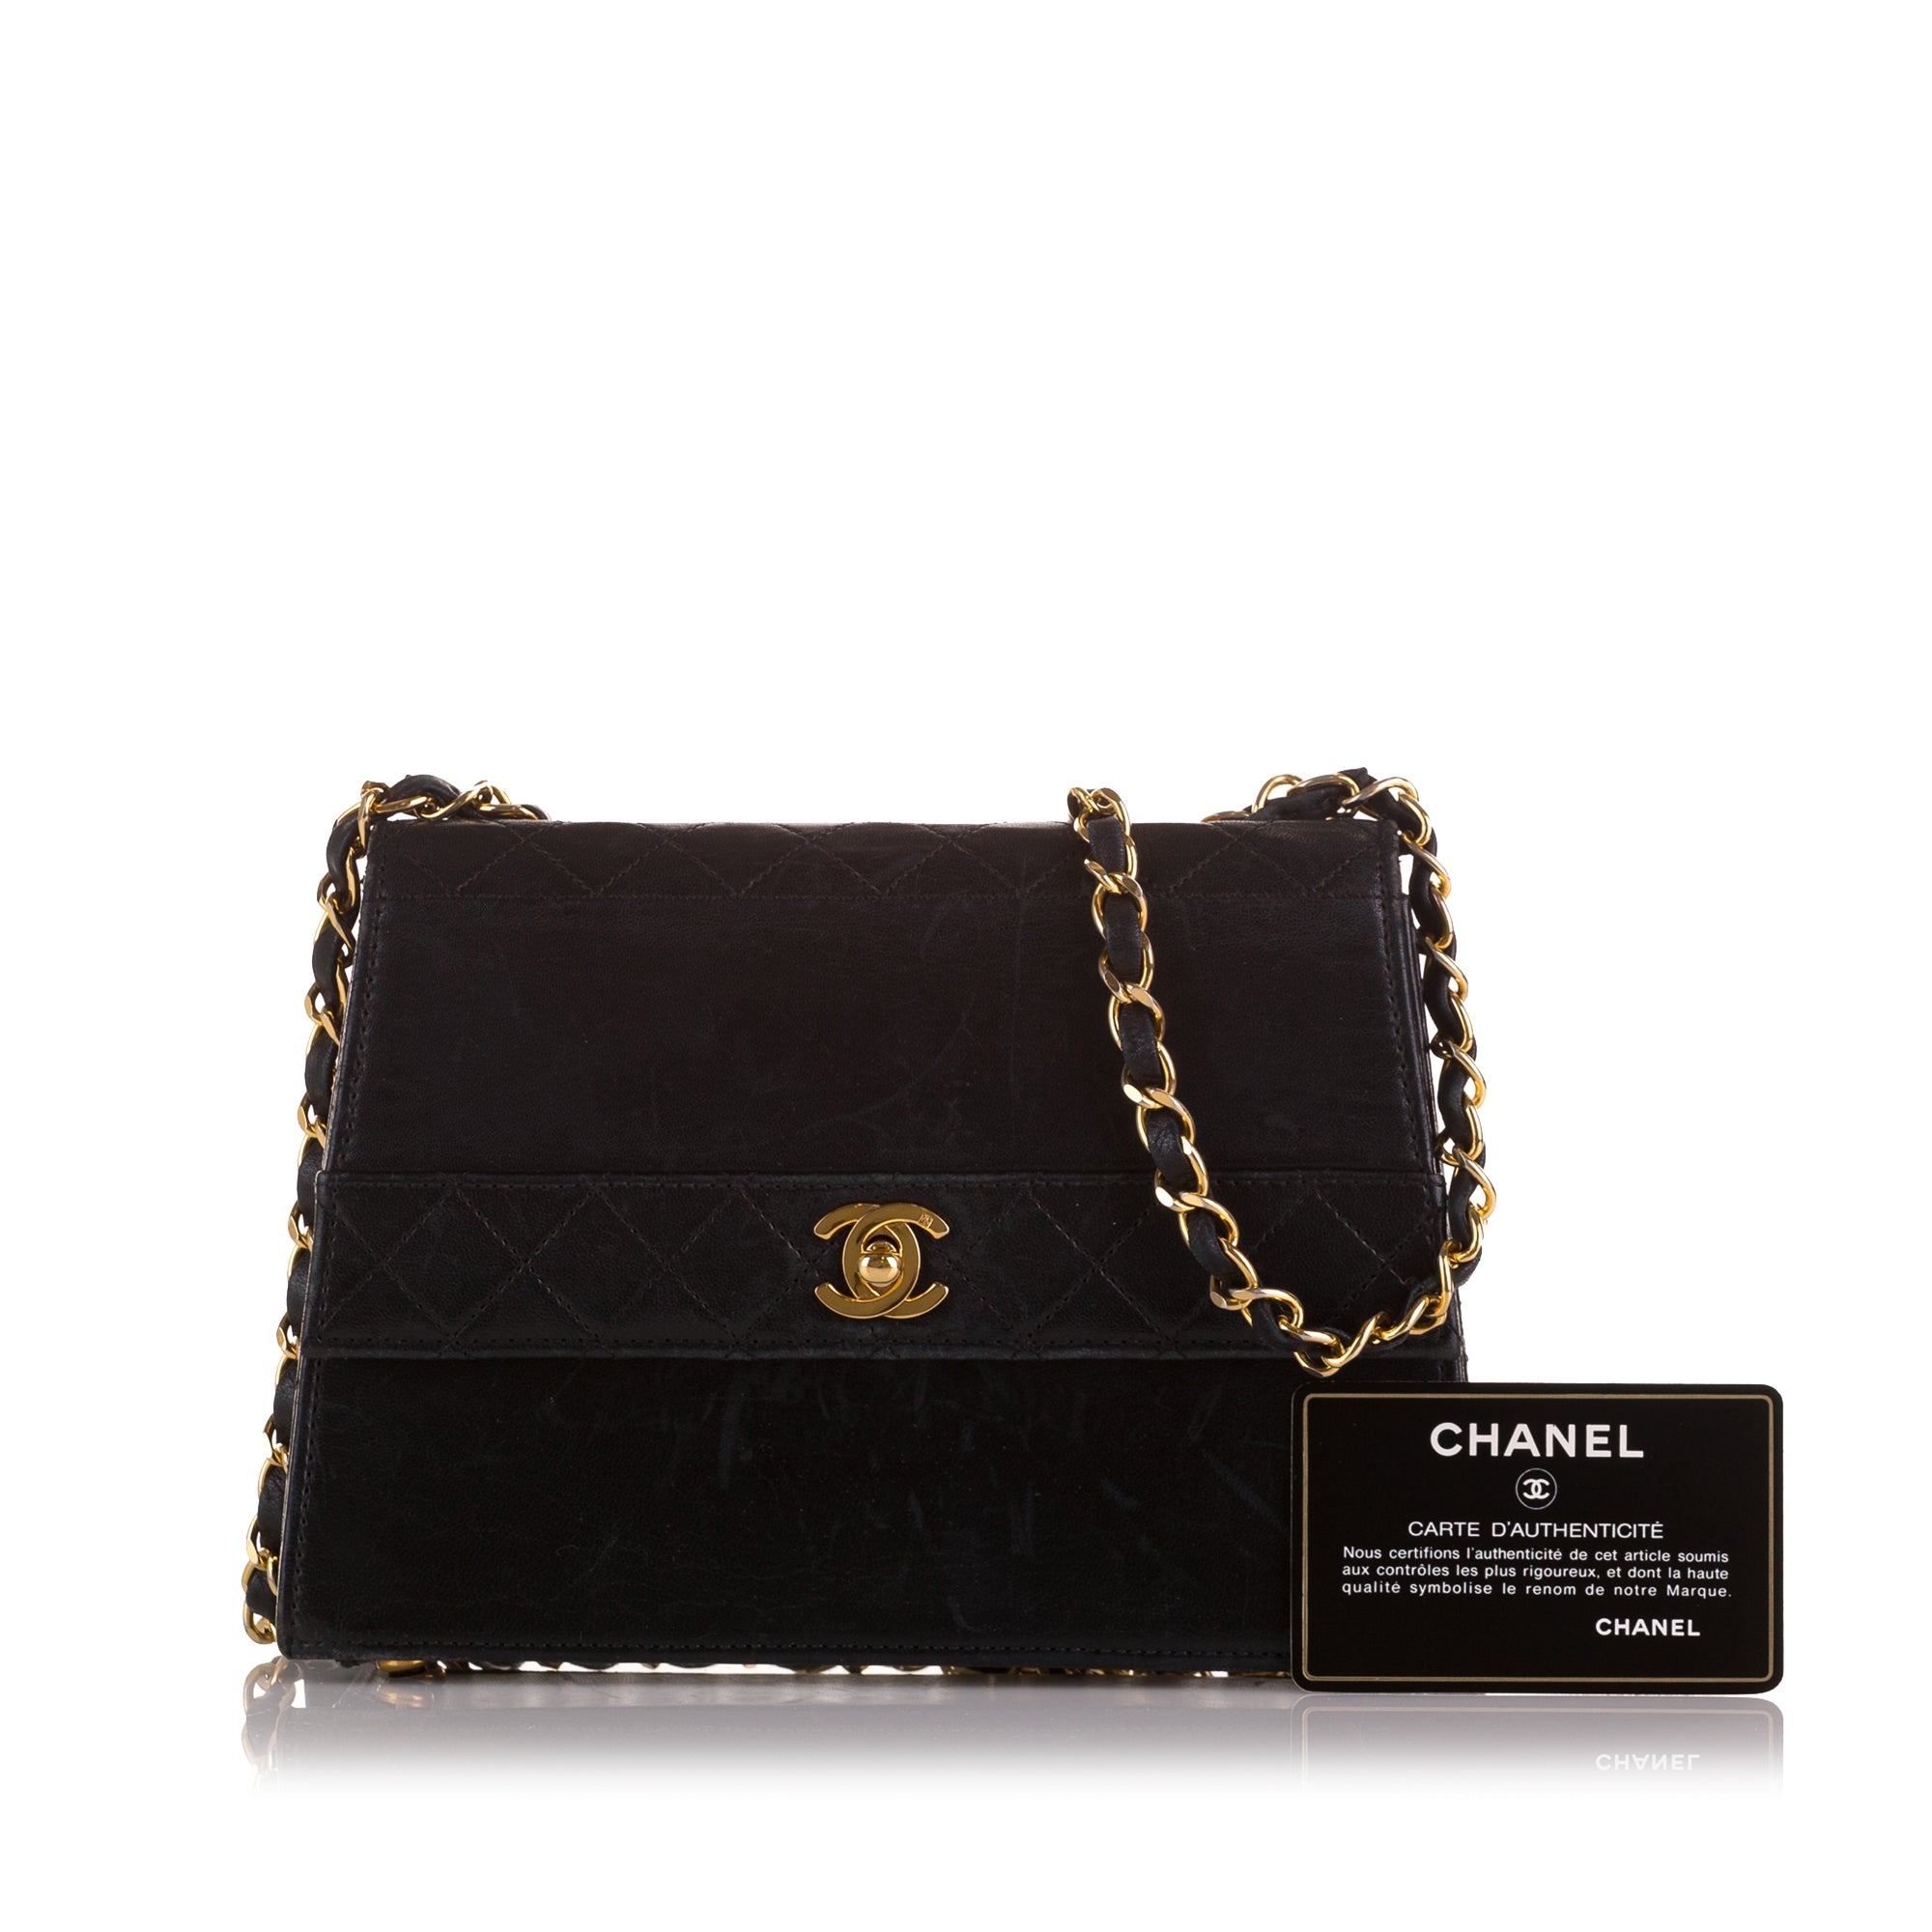 Chanel timeless classic flap - Gem